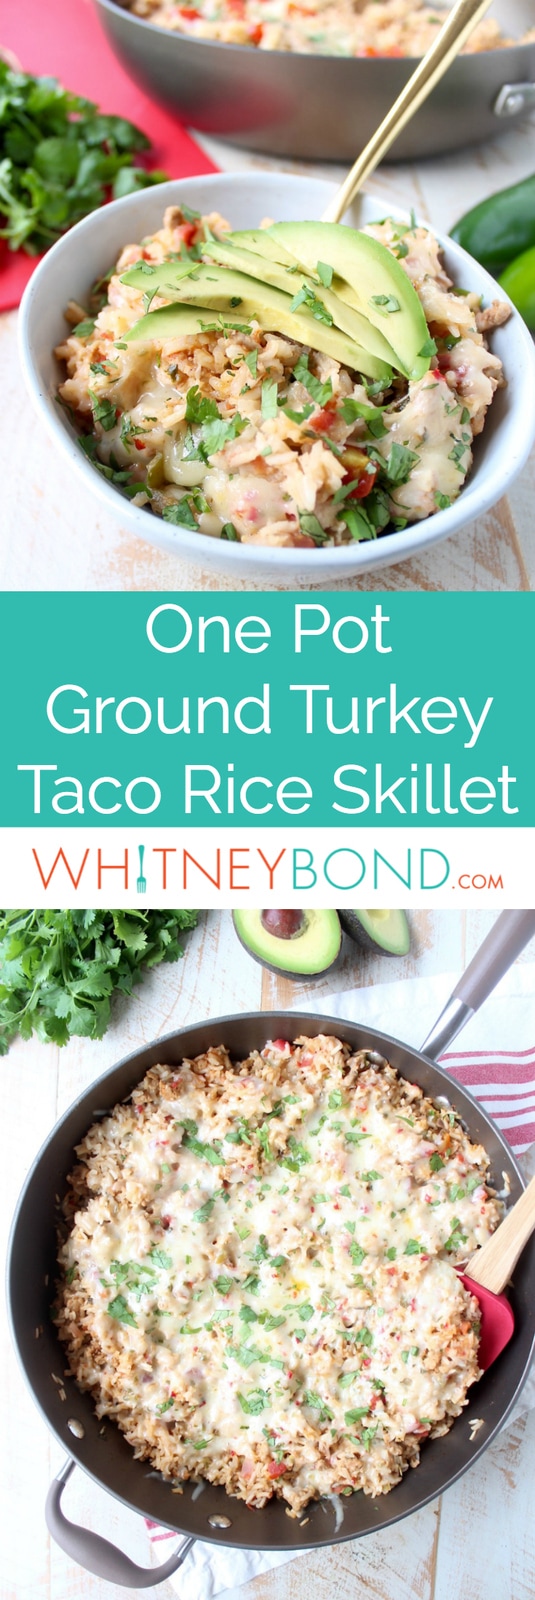 Taco Rice Skillet Recipe with Ground Turkey - WhitneyBond.com